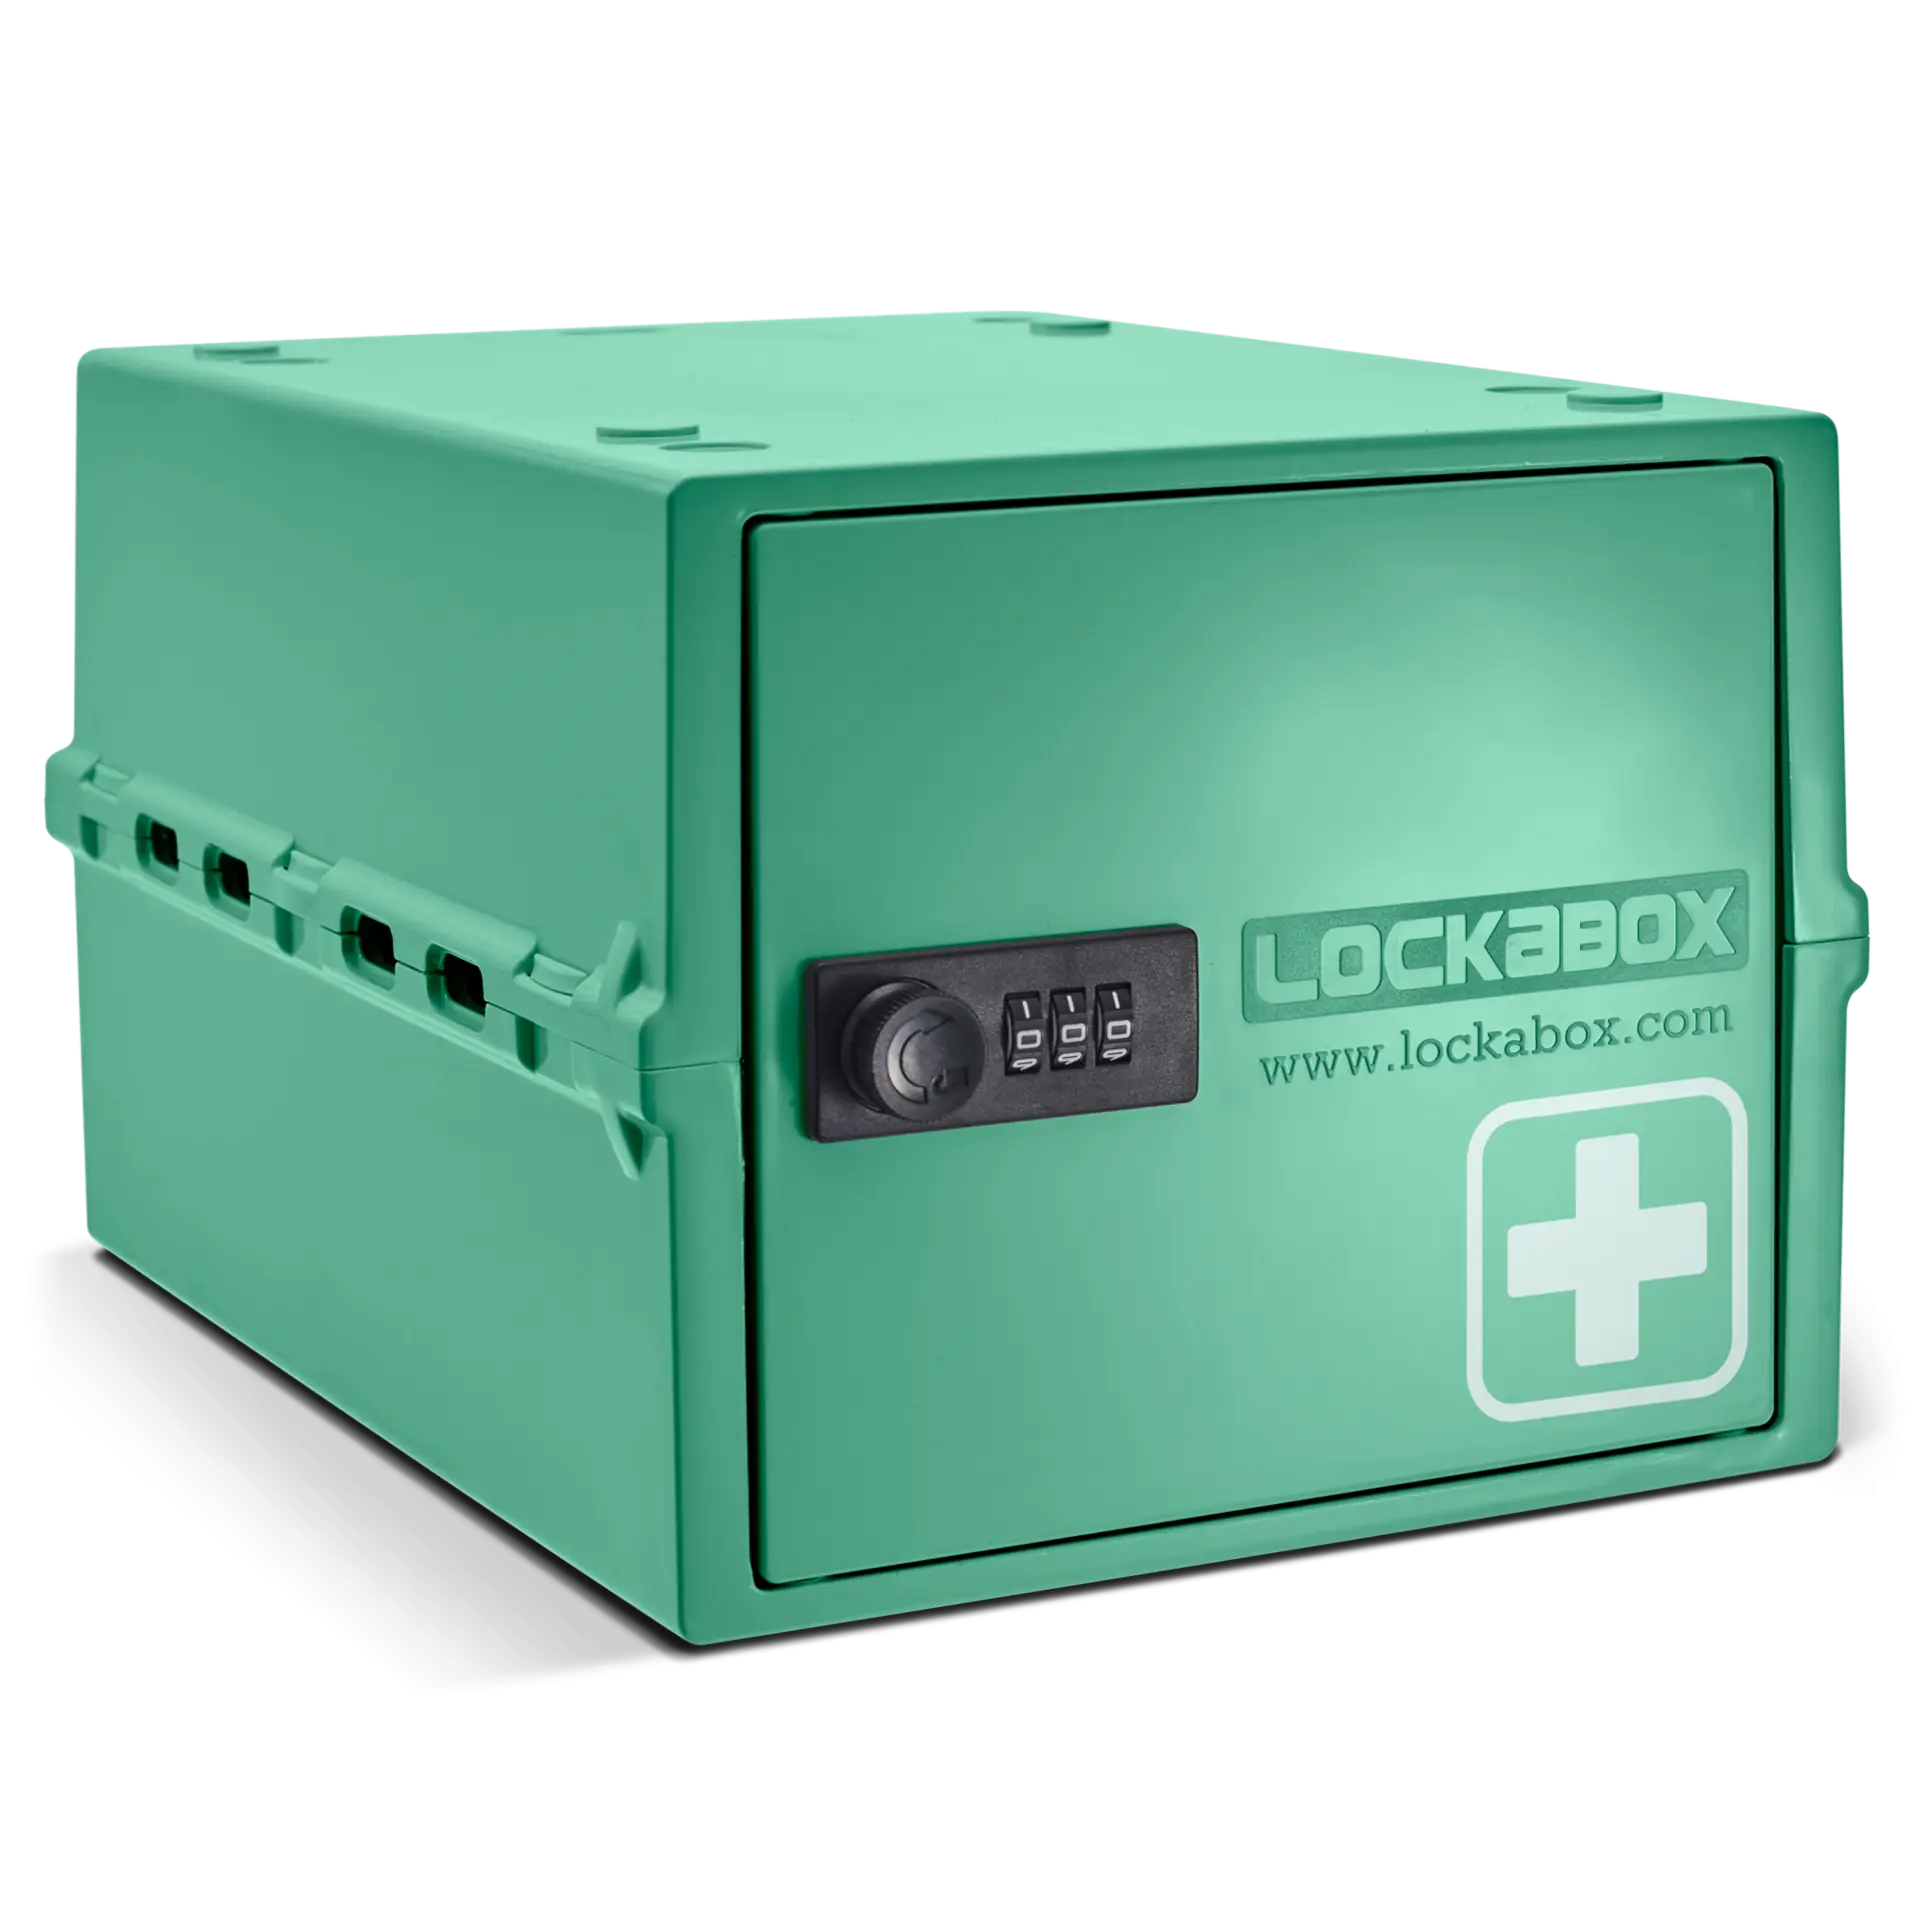 Lockabox-Amazon-2000x2000-Medi-Green